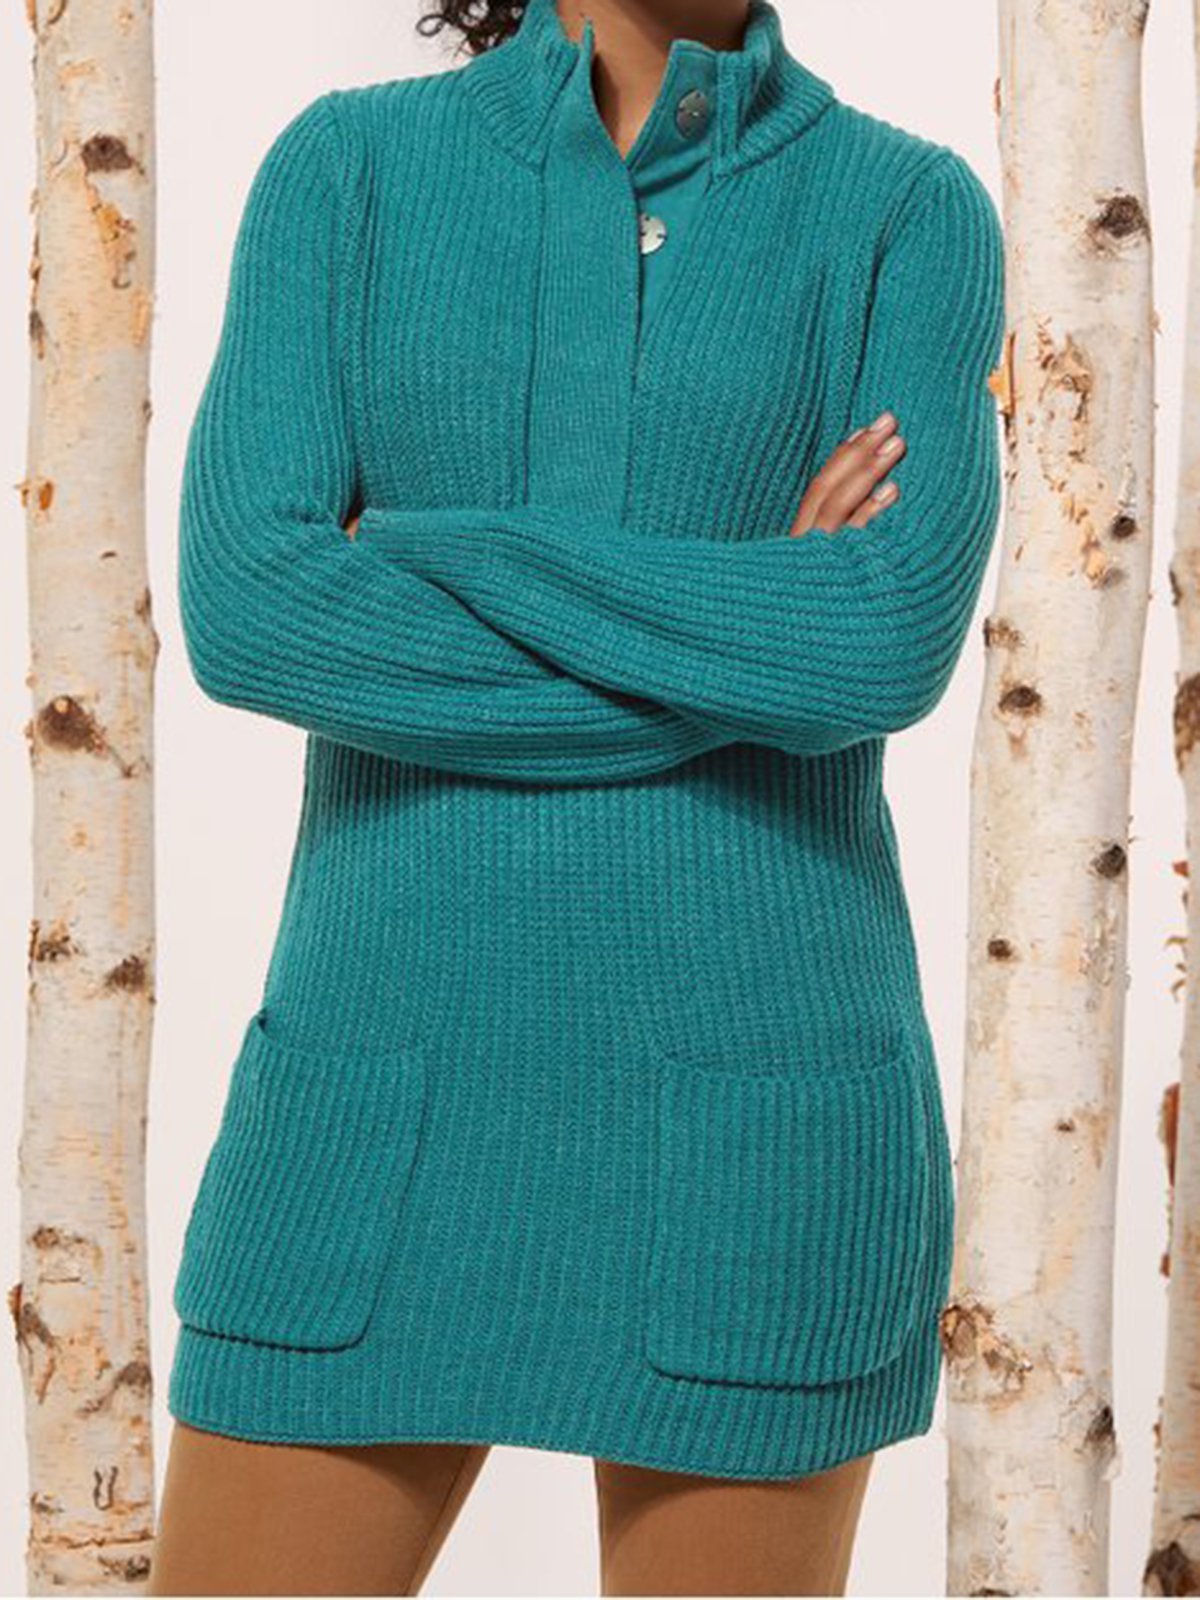 Long Sleeve Women's Knitted Plain Sweater